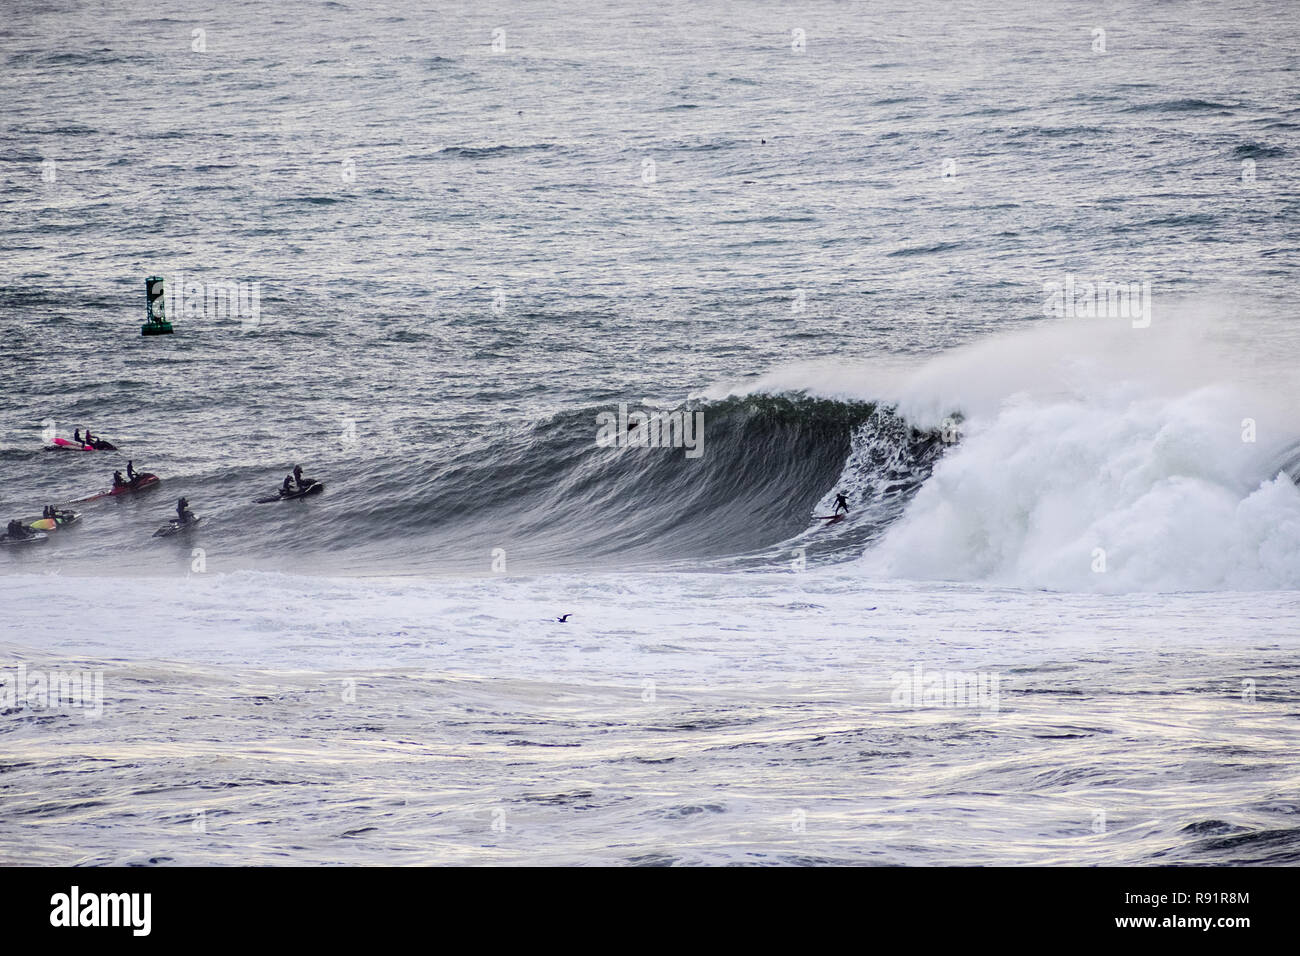 Surfers riding huge waves on the west coast, close to Pillar Point and Mavericks Beach, Half Moon Bay, California Stock Photo